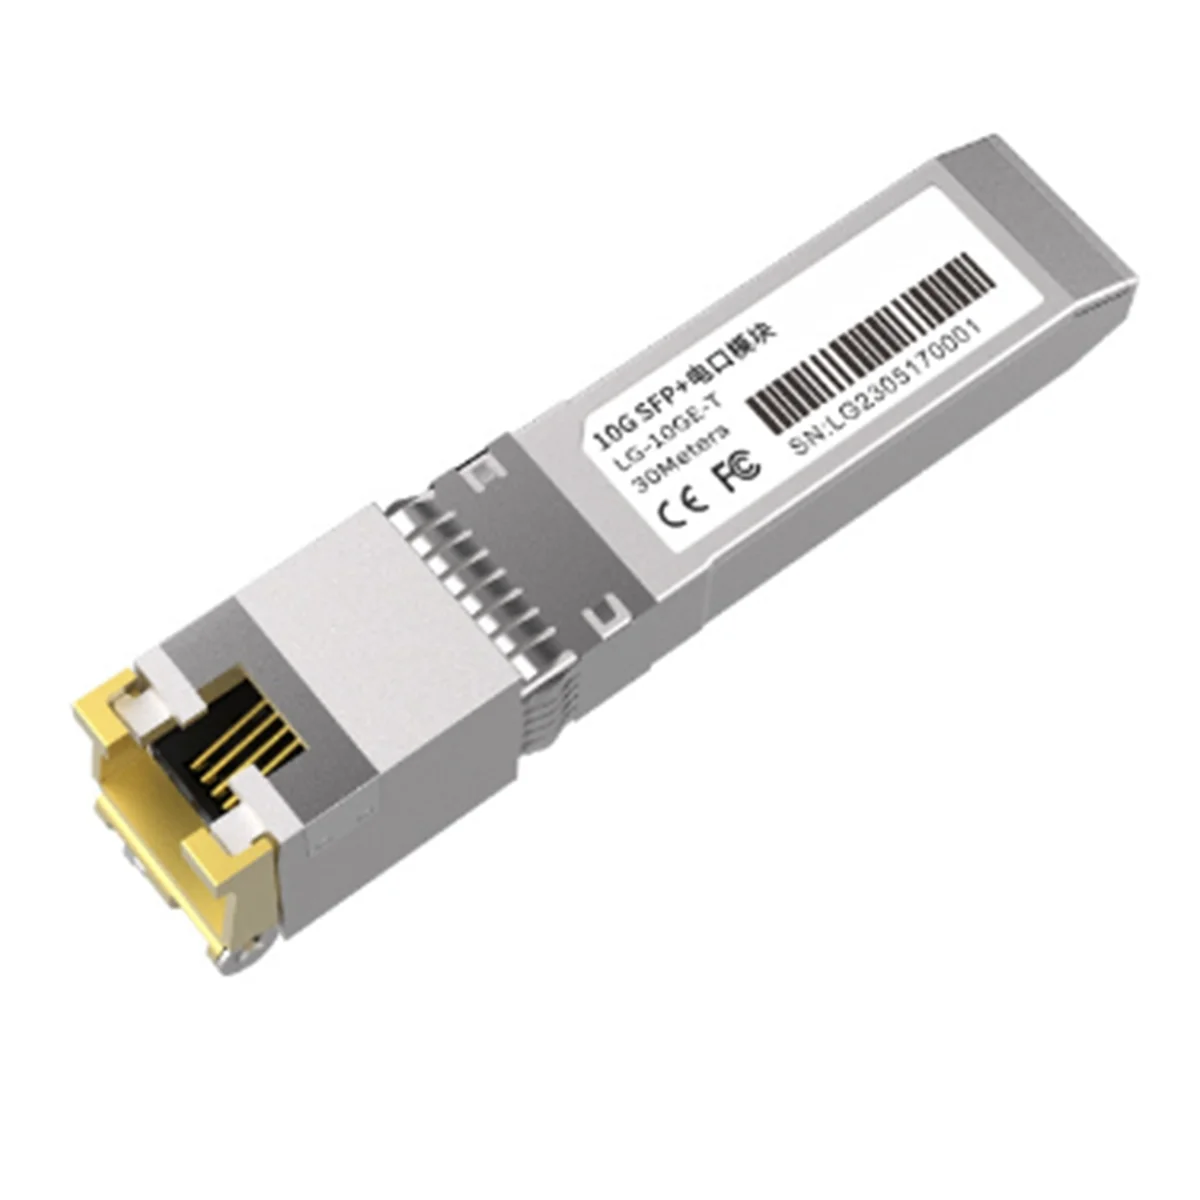 

10G SFP+ Module 10GbE Copper SFP Modules Optical Port Turn to RJ45 Ethernet Port Gigabit 1000M Transceiver Module